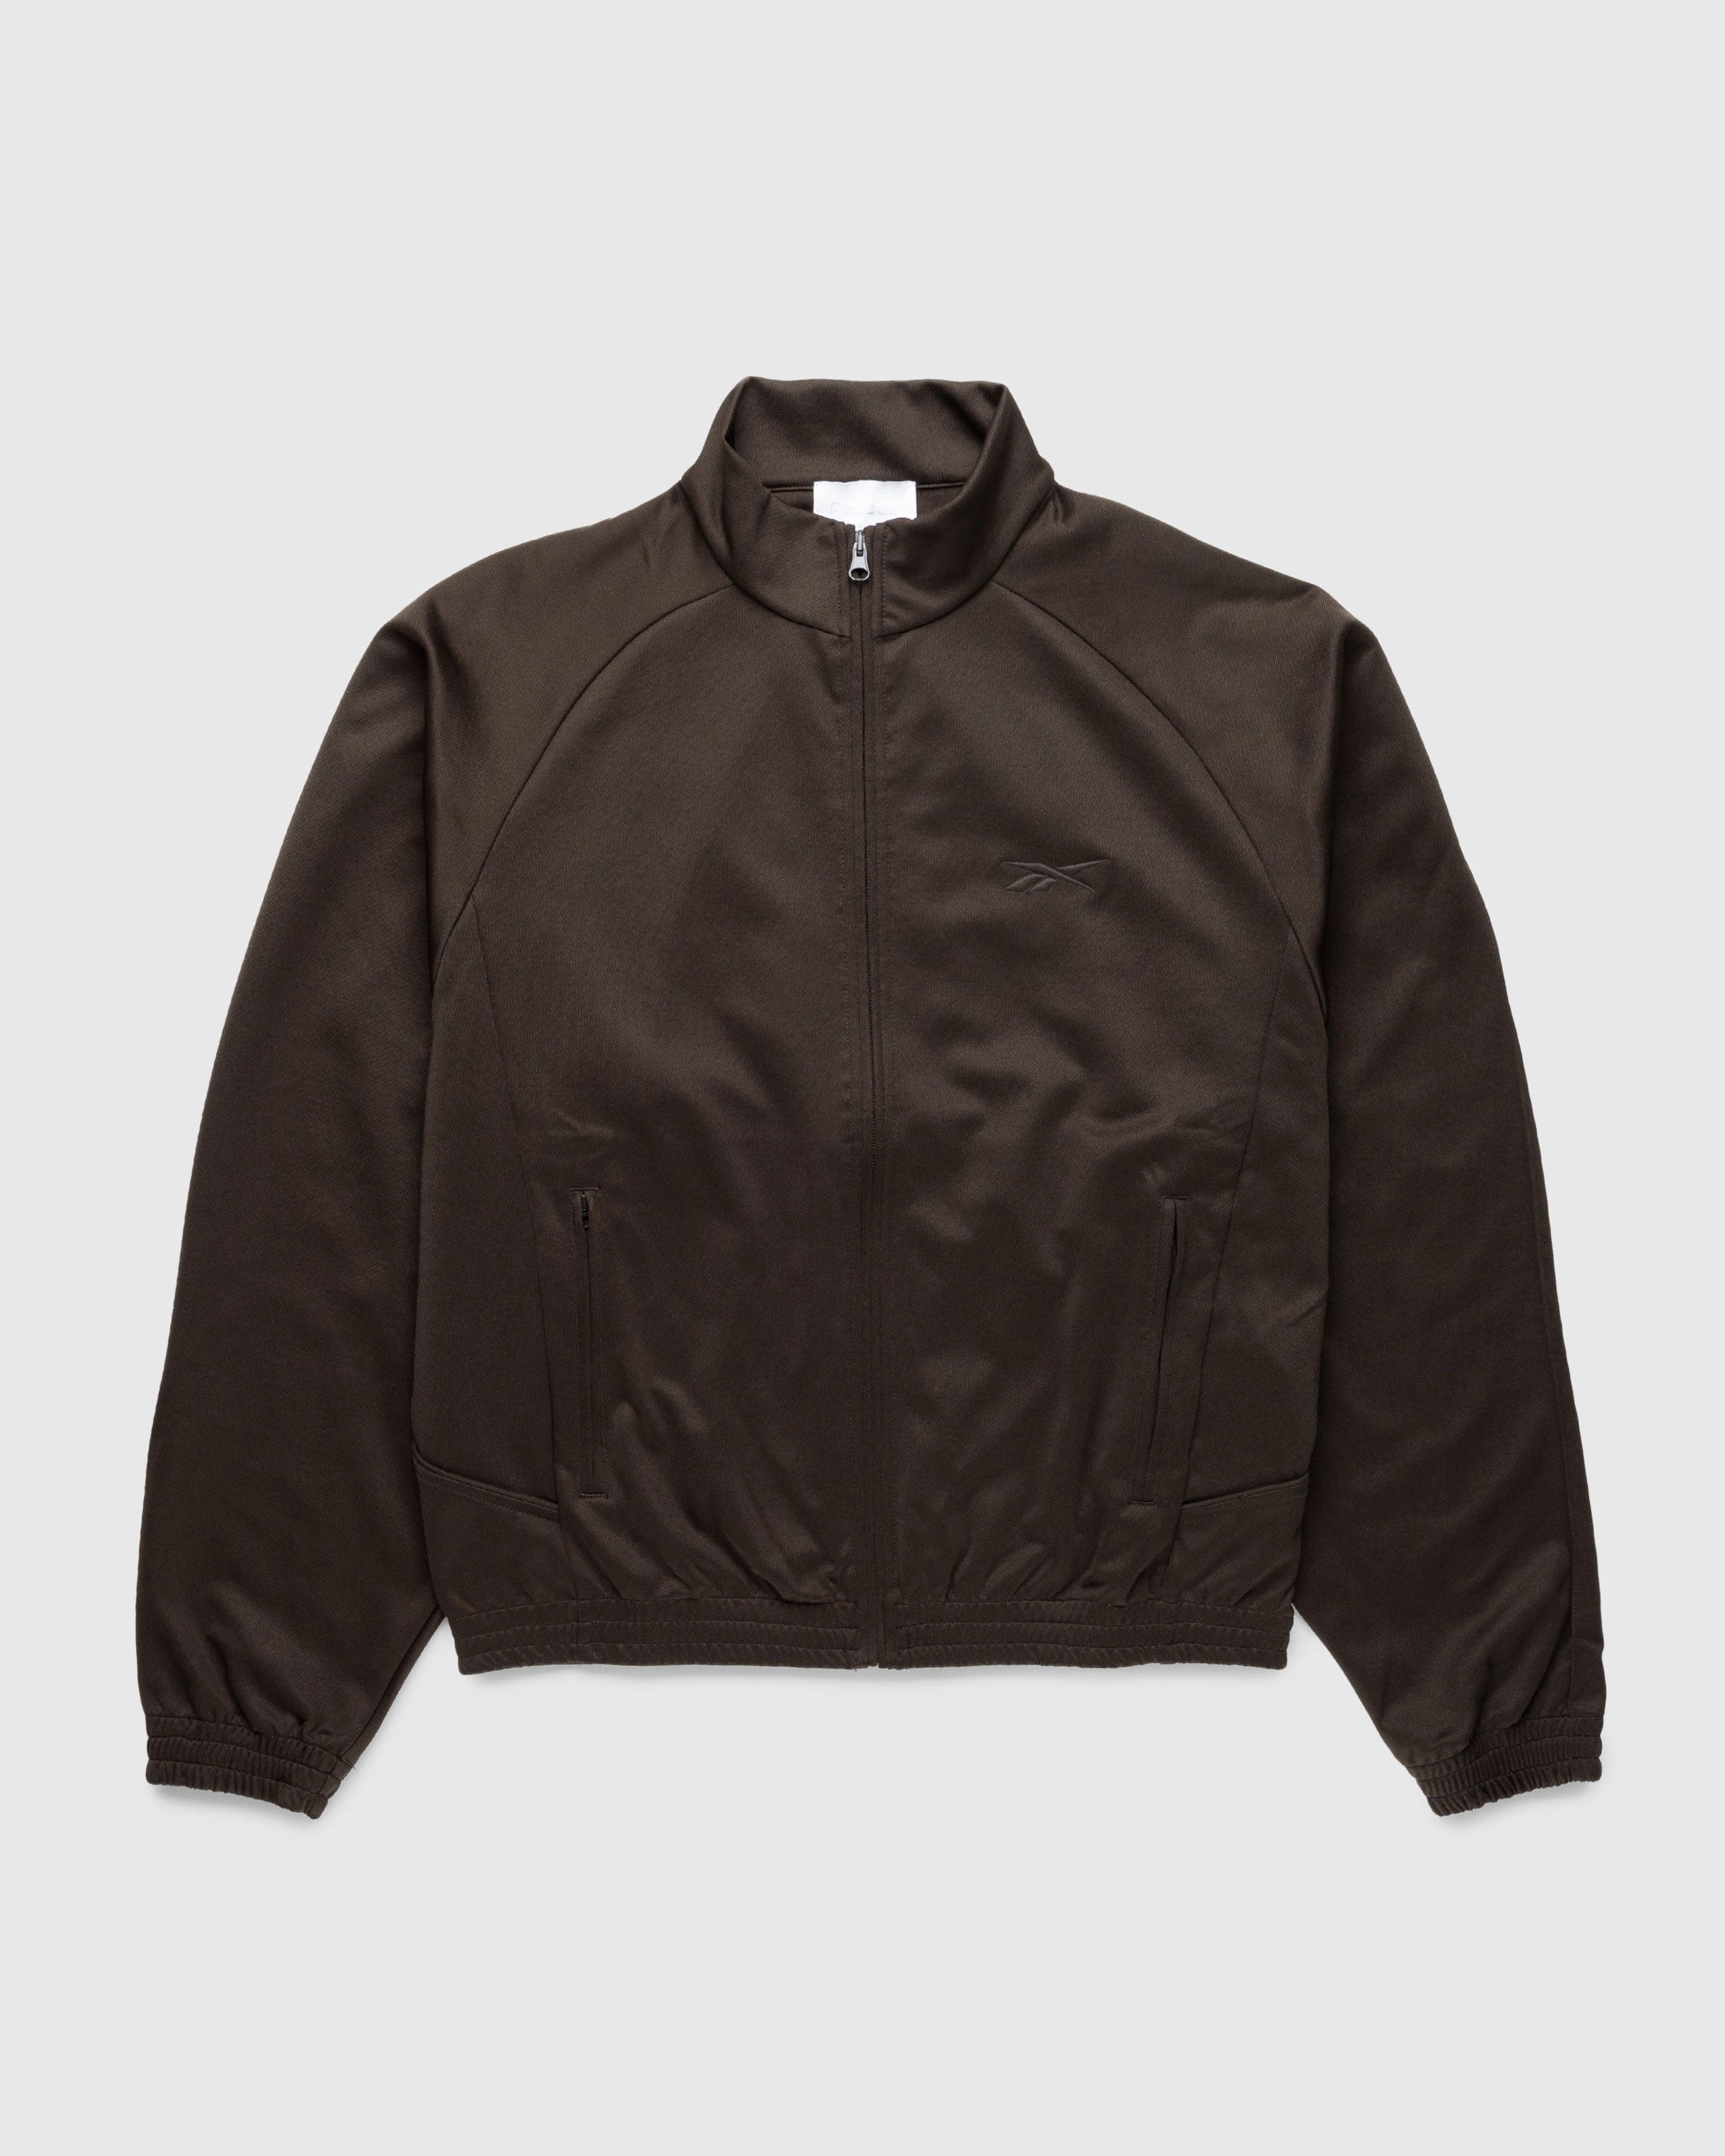 Reebok - Piped Track Jacket Moro - Clothing - Brown - Image 1